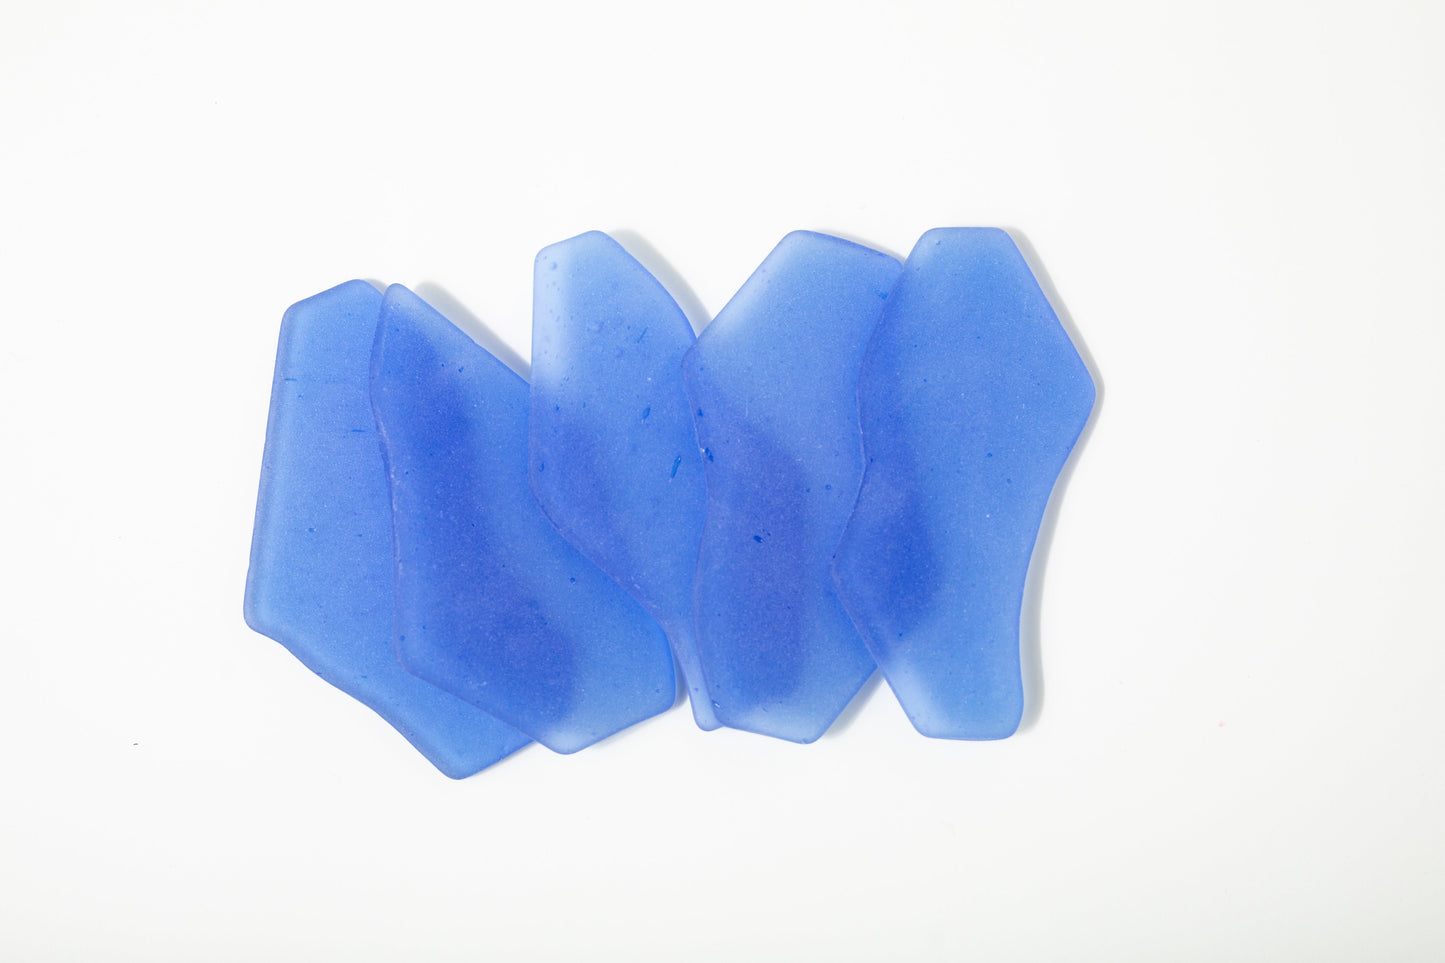 Sea glass place cards - Cornflower blue - Irregular shapes